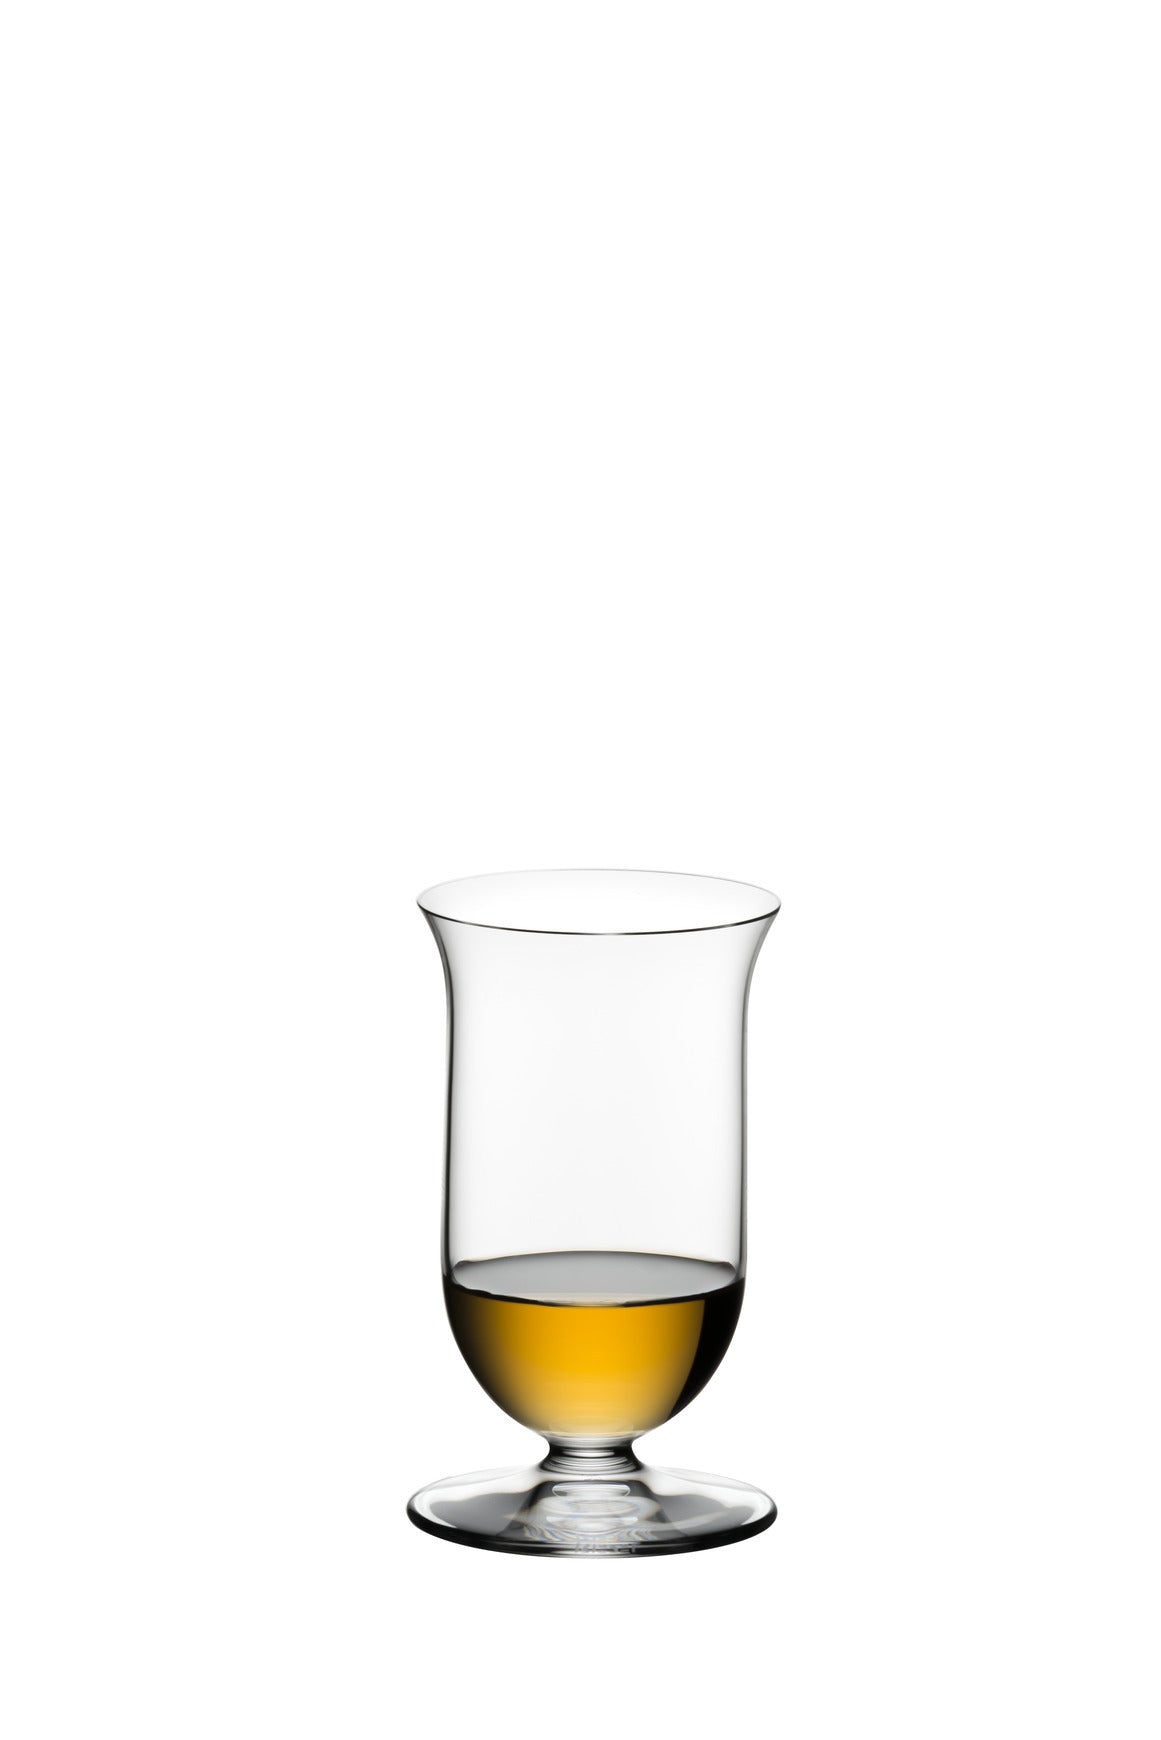 Riedel Vinum Singel Malt Whisky